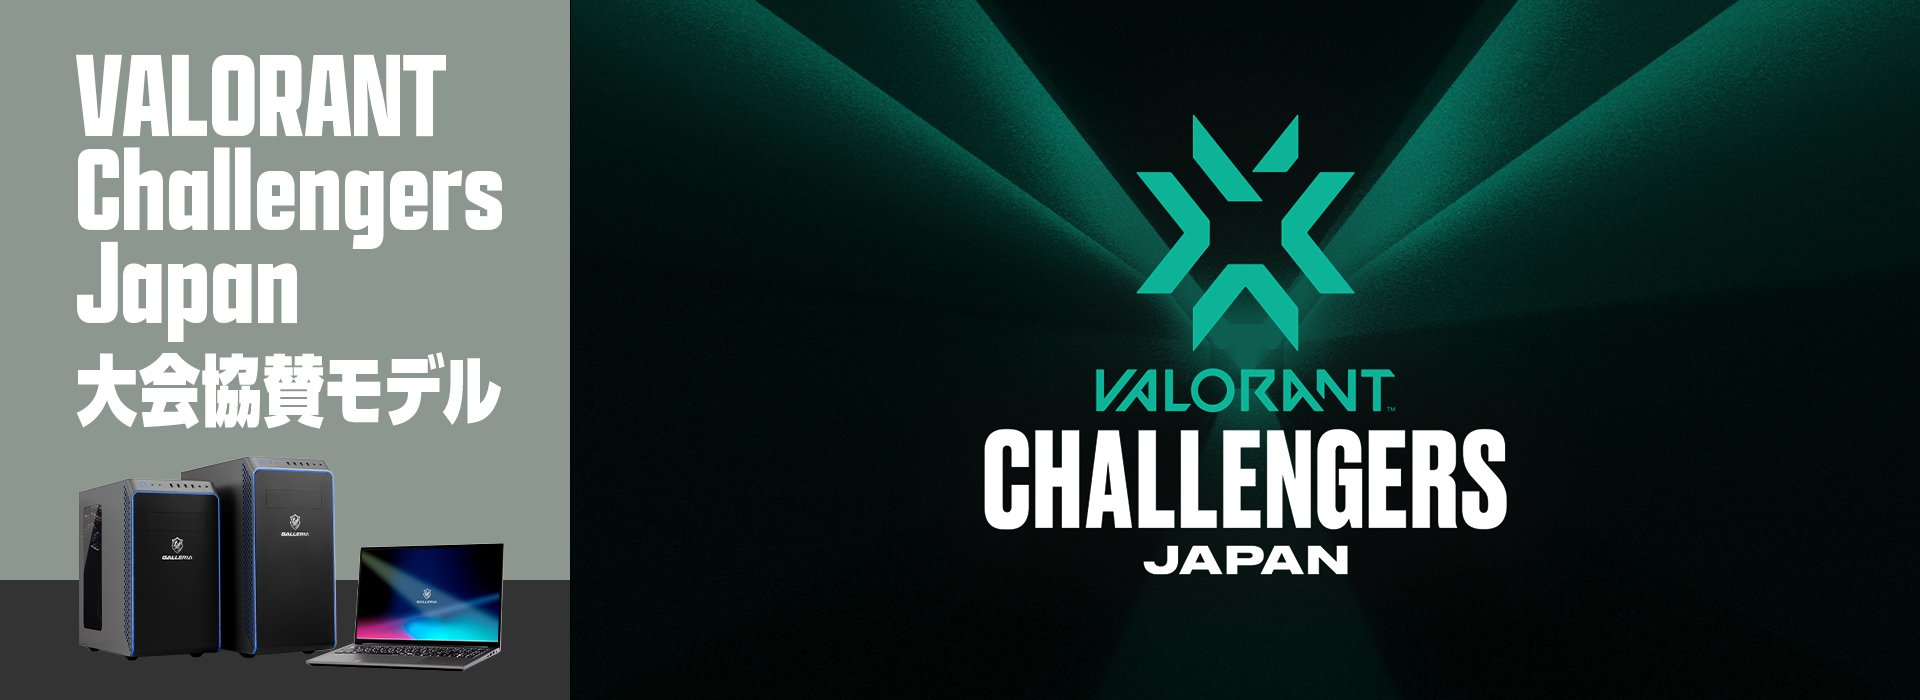 VALORANT Challengers Japan - Challengers Japan 大会協賛モデル